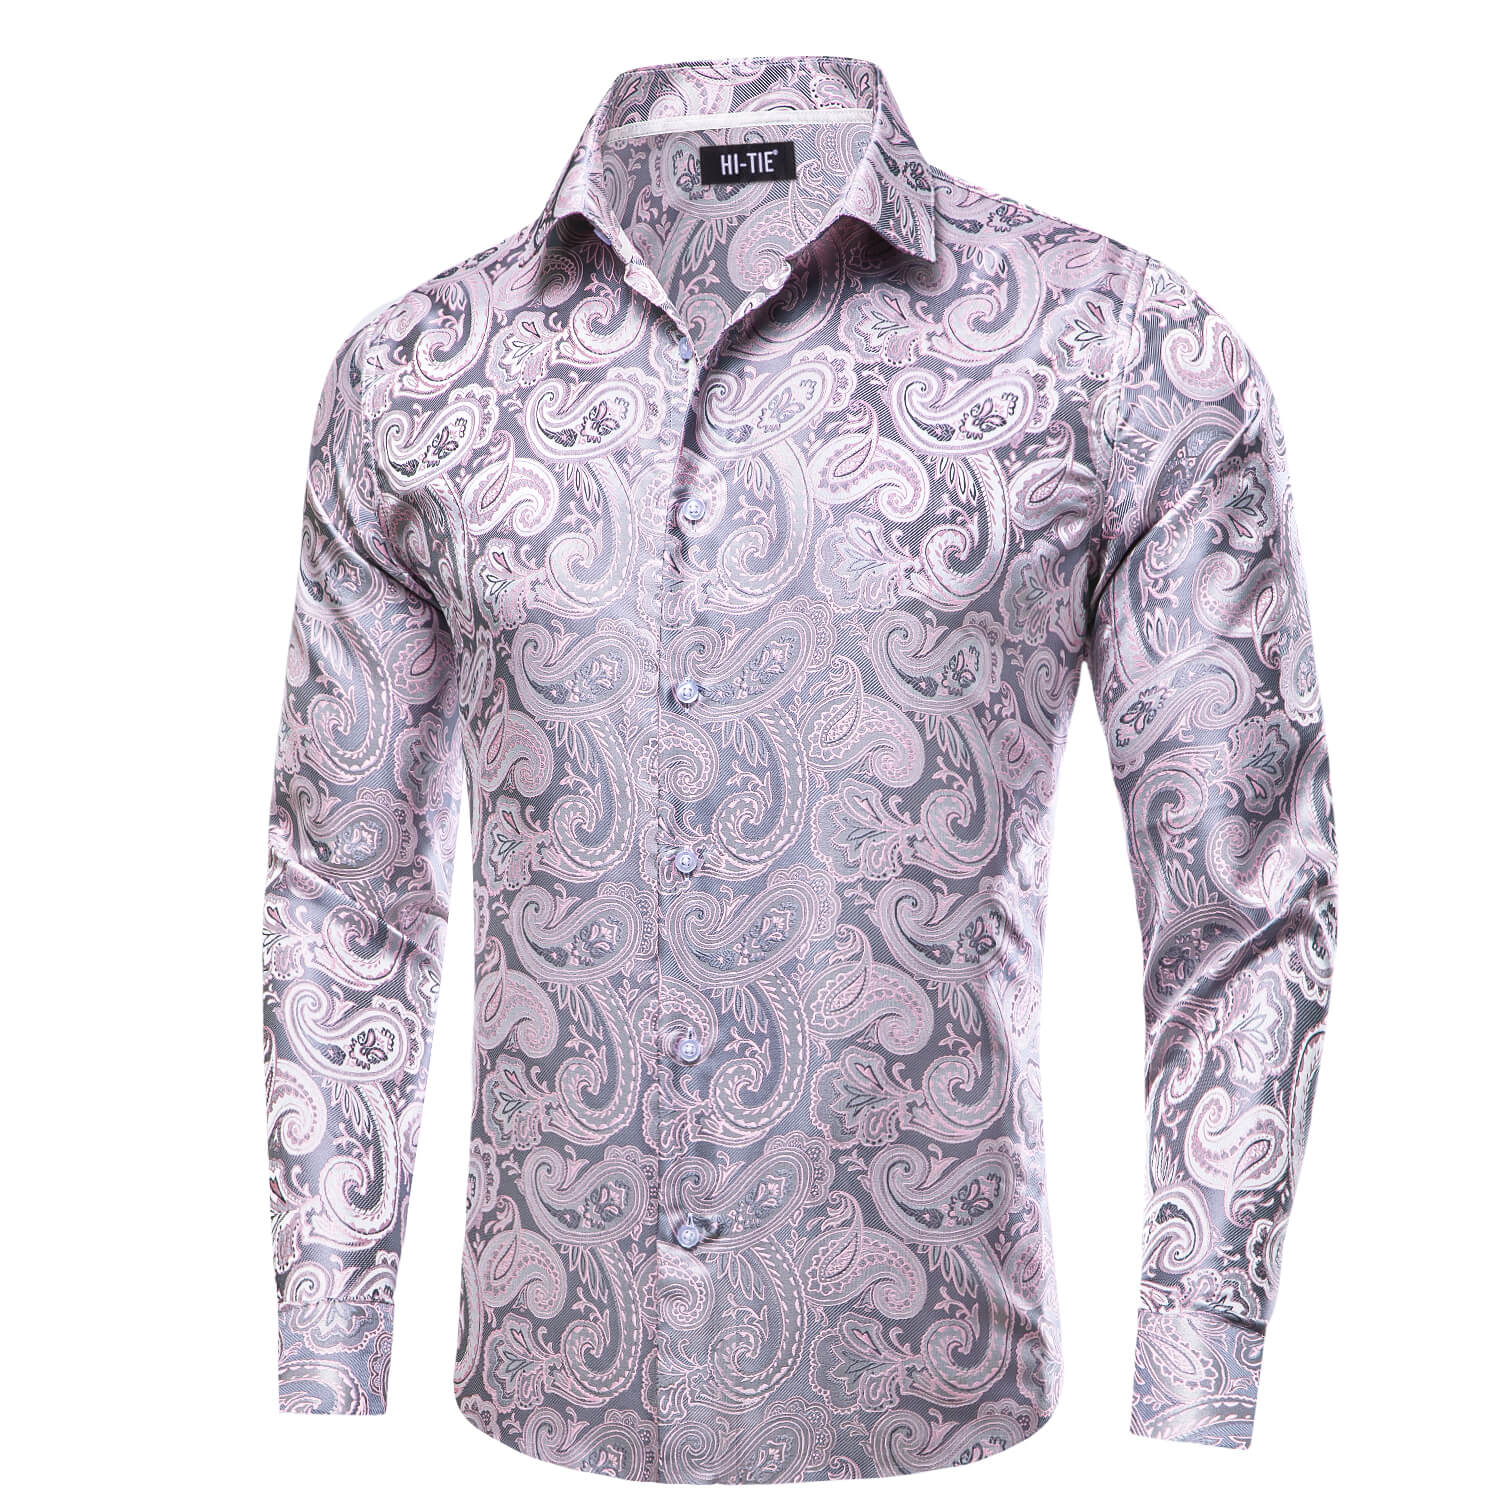 Hi-Tie Button Down Shirt Pale Pink Paisley Silk Shirt for Men High Quality